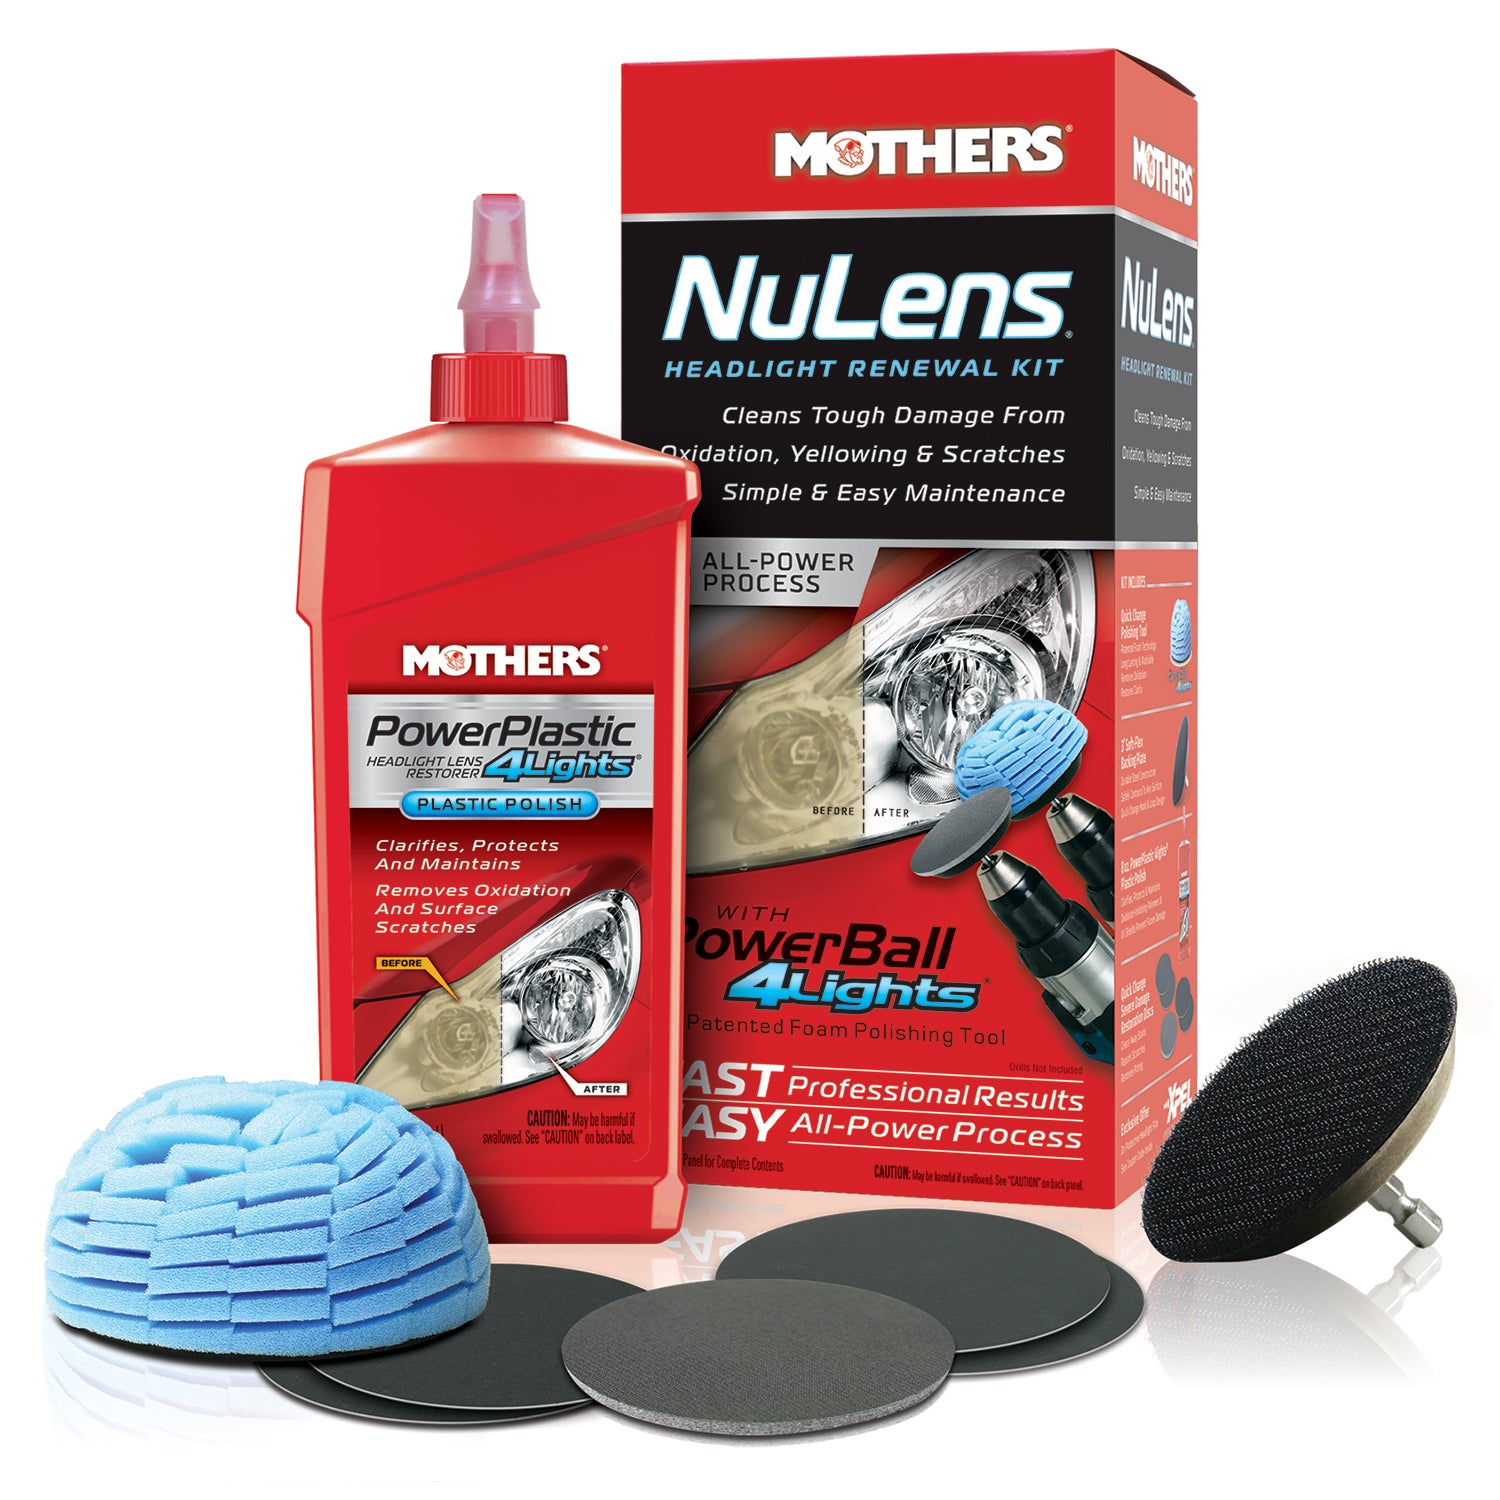 Mothers Nulens Headlight Renewal Kit - 687251